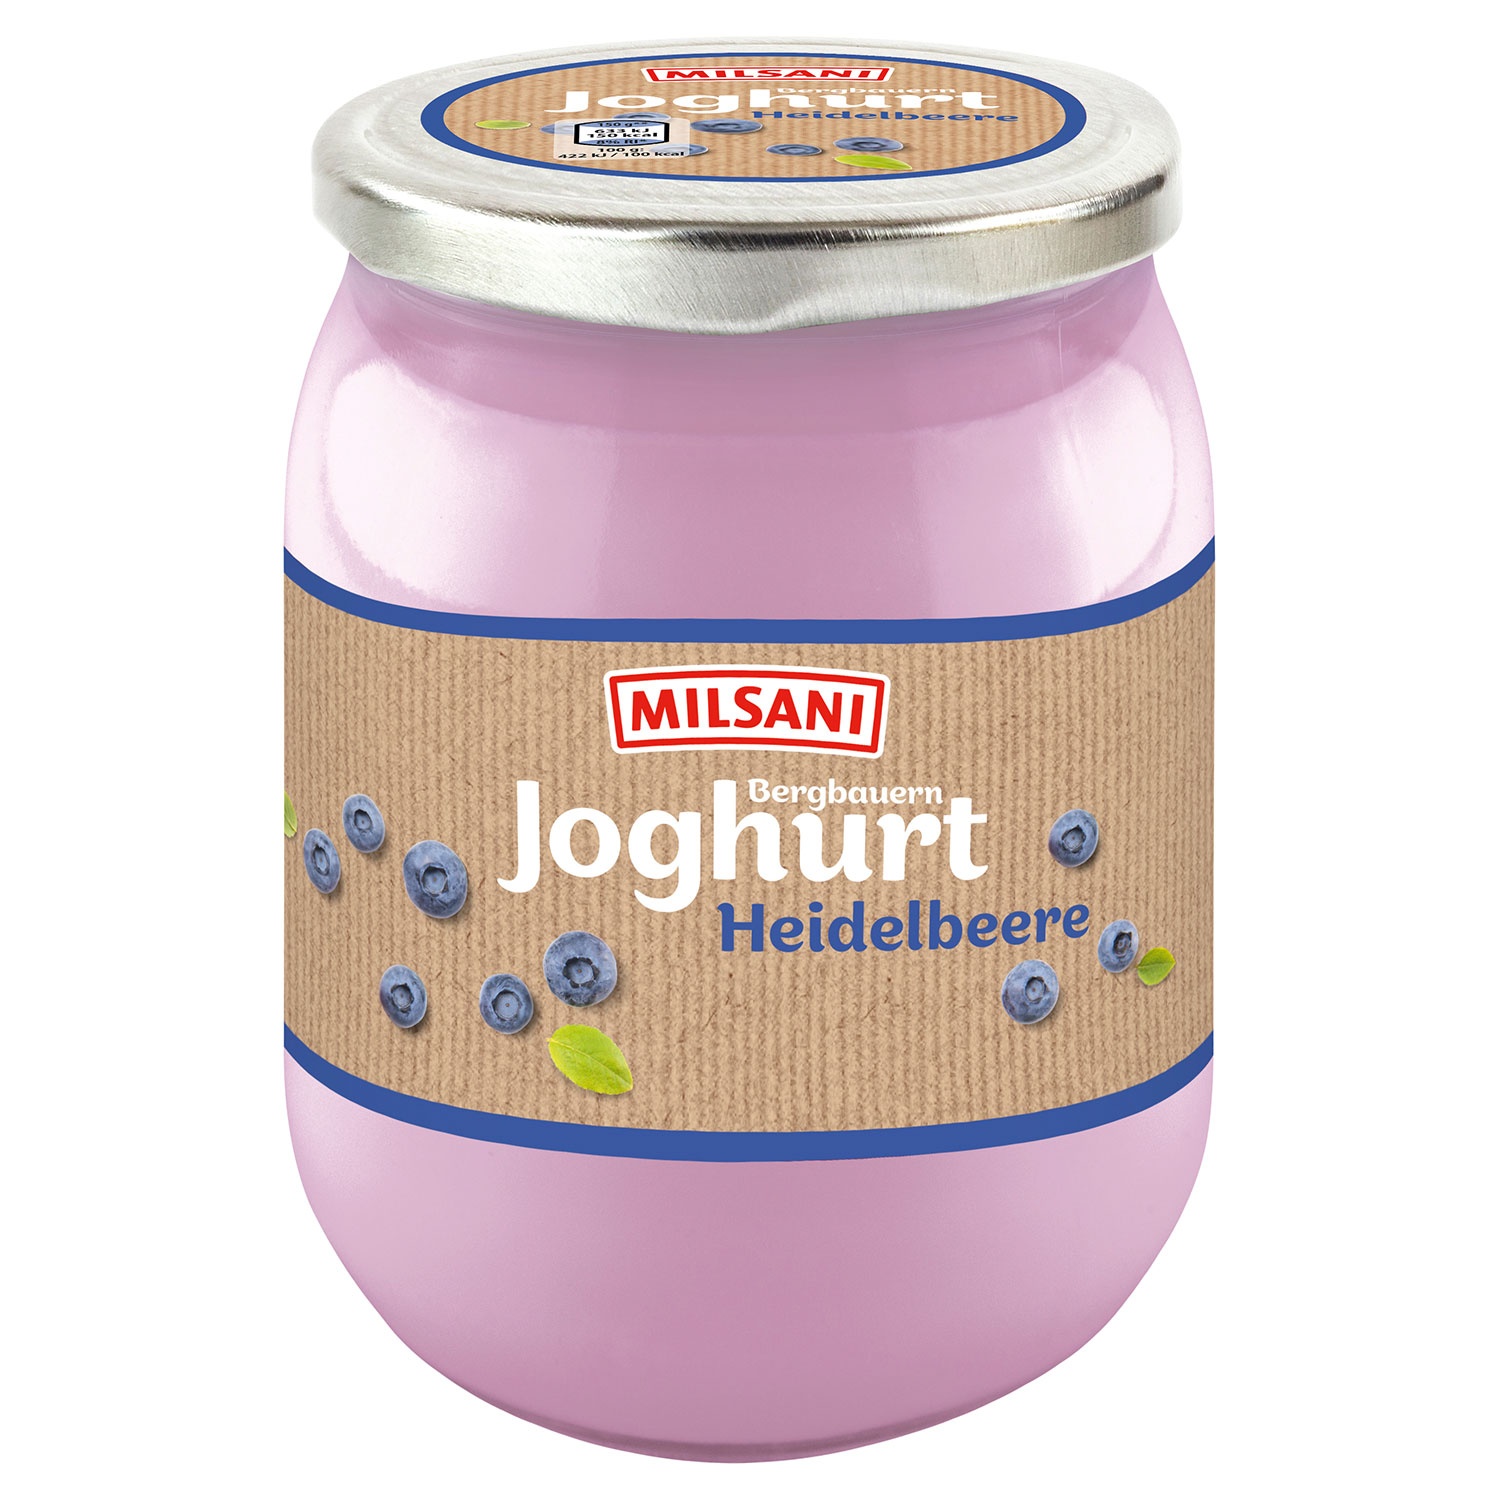 MILSANI Bergbauern-Joghurt 450 g, Heidelbeere